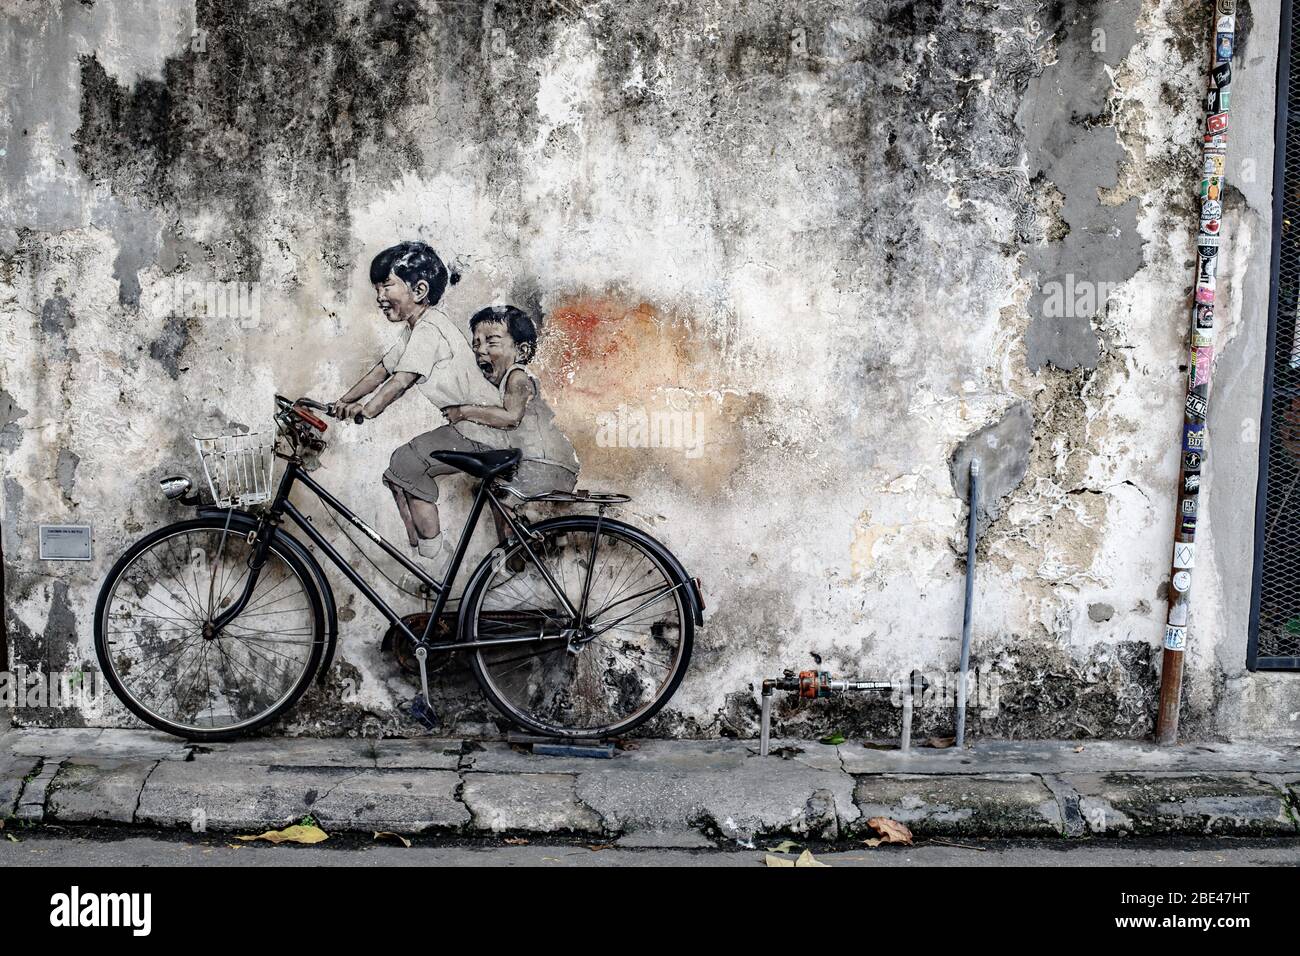 Street artwork of two kids riding a bike in Penang, Malaysia - Arte urbano de dos niños montando una bicicleta en Malasia Stock Photo